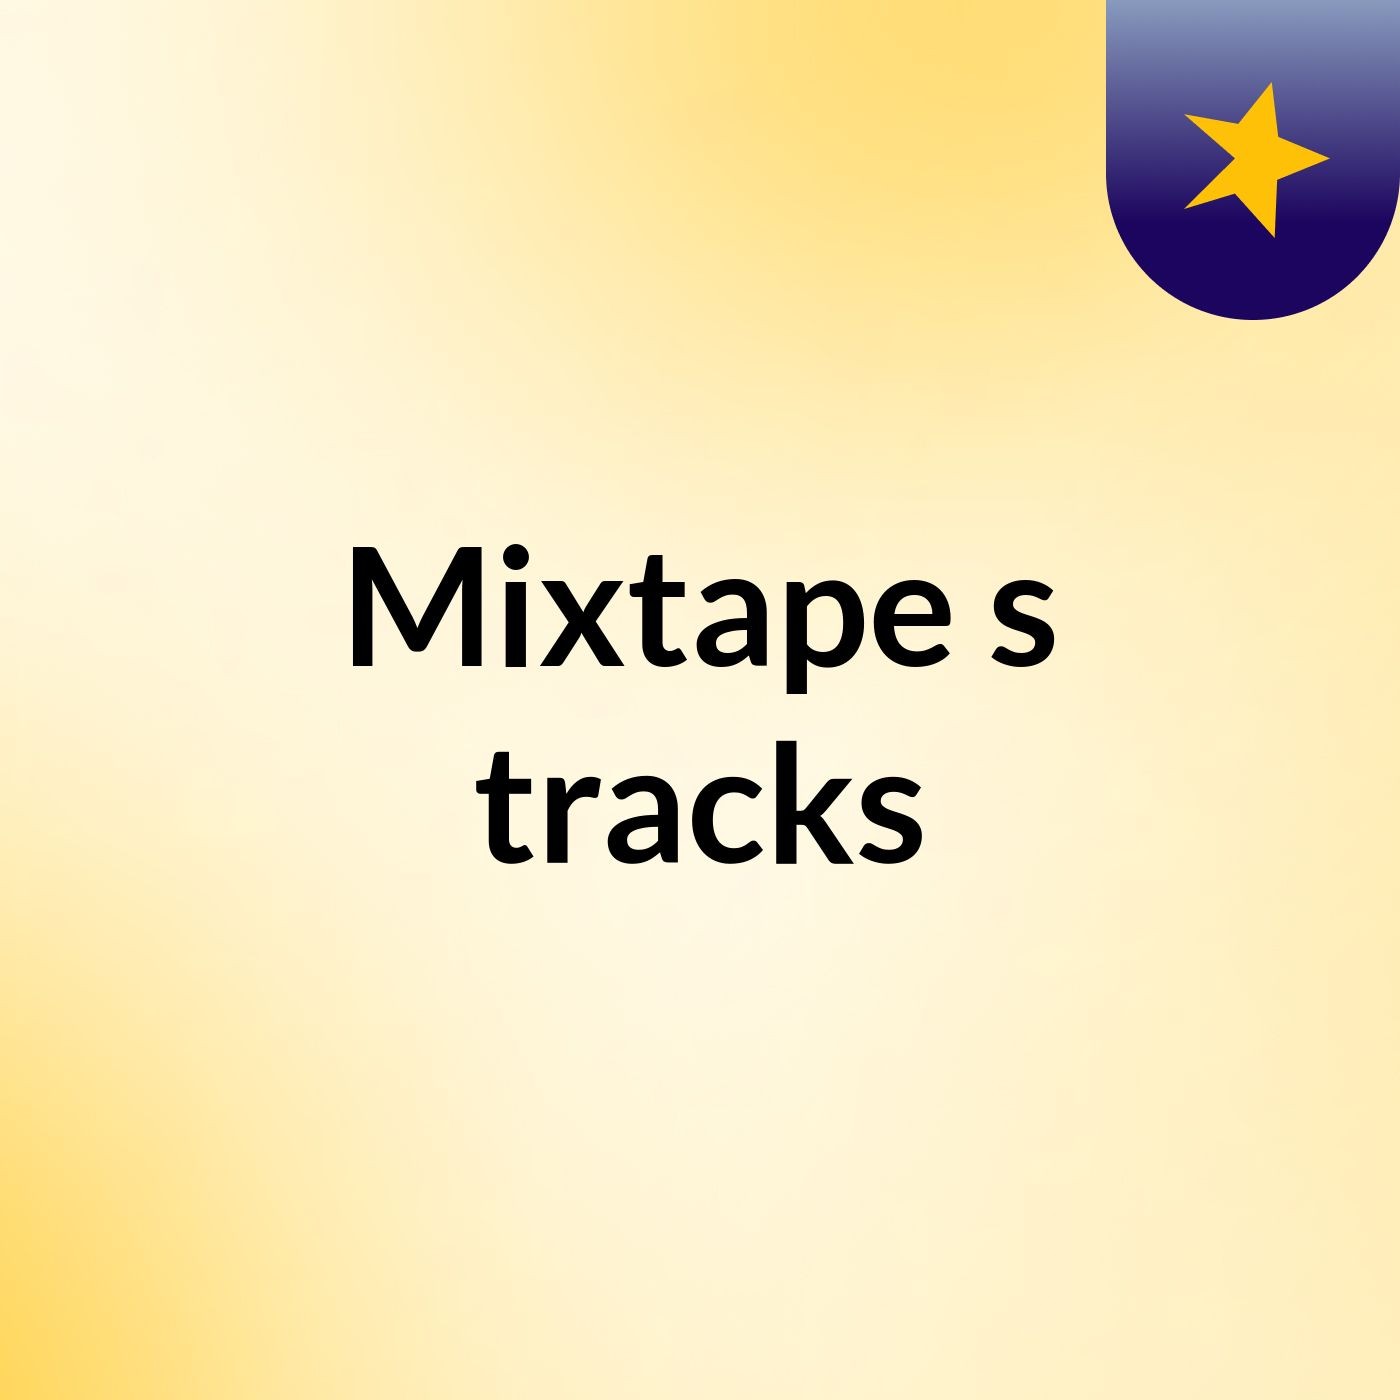 Mixtape's tracks